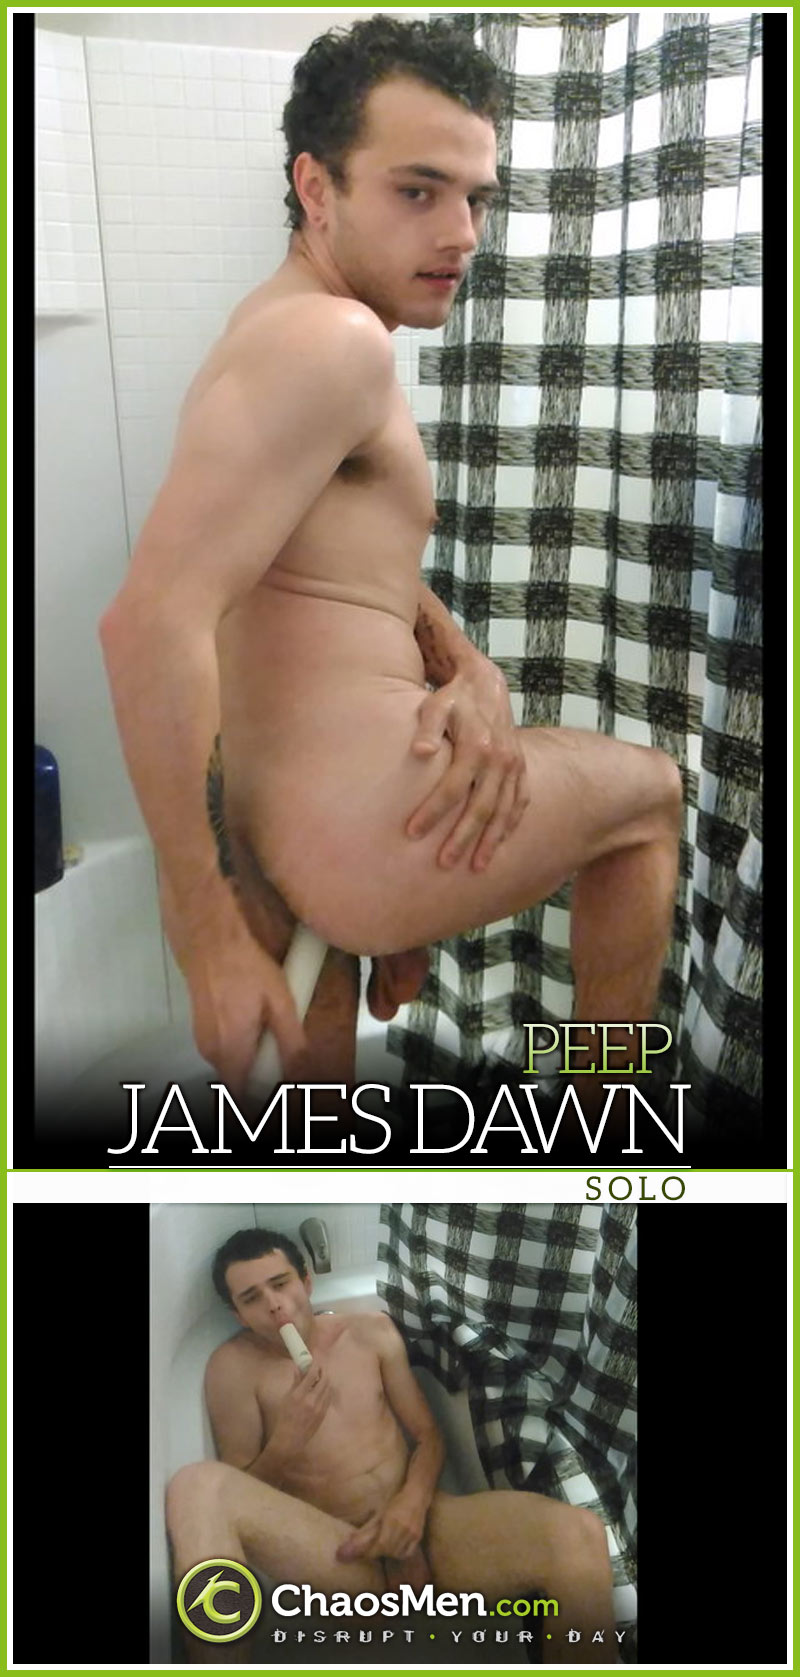 ChaosMen James Dawn Peep Sex Image Hq